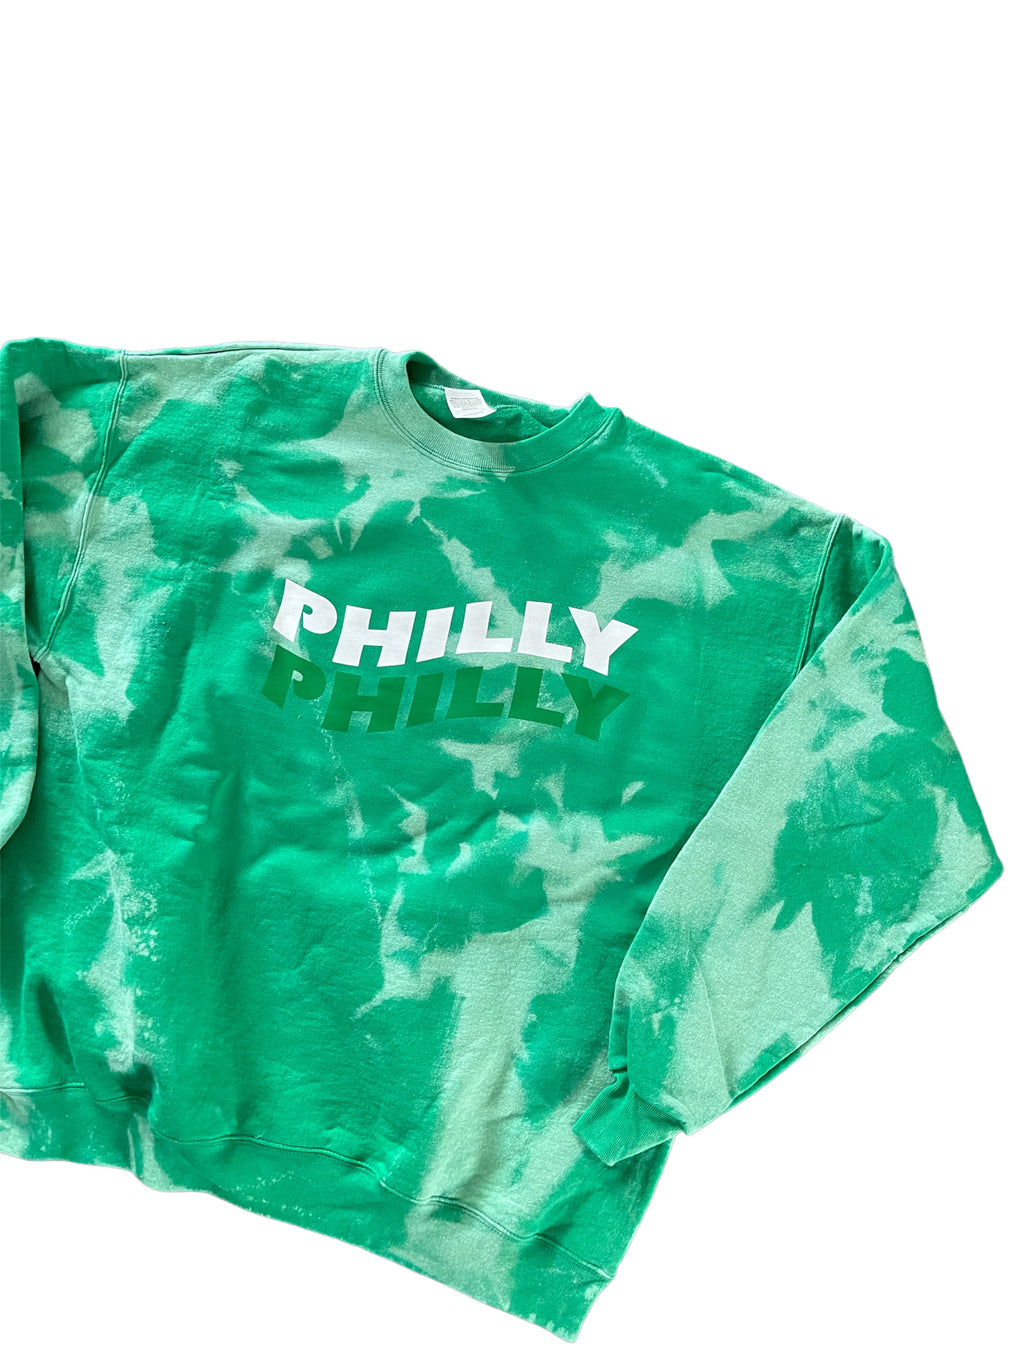 Philly Philly Wavy Green Crewneck Sweatshirt